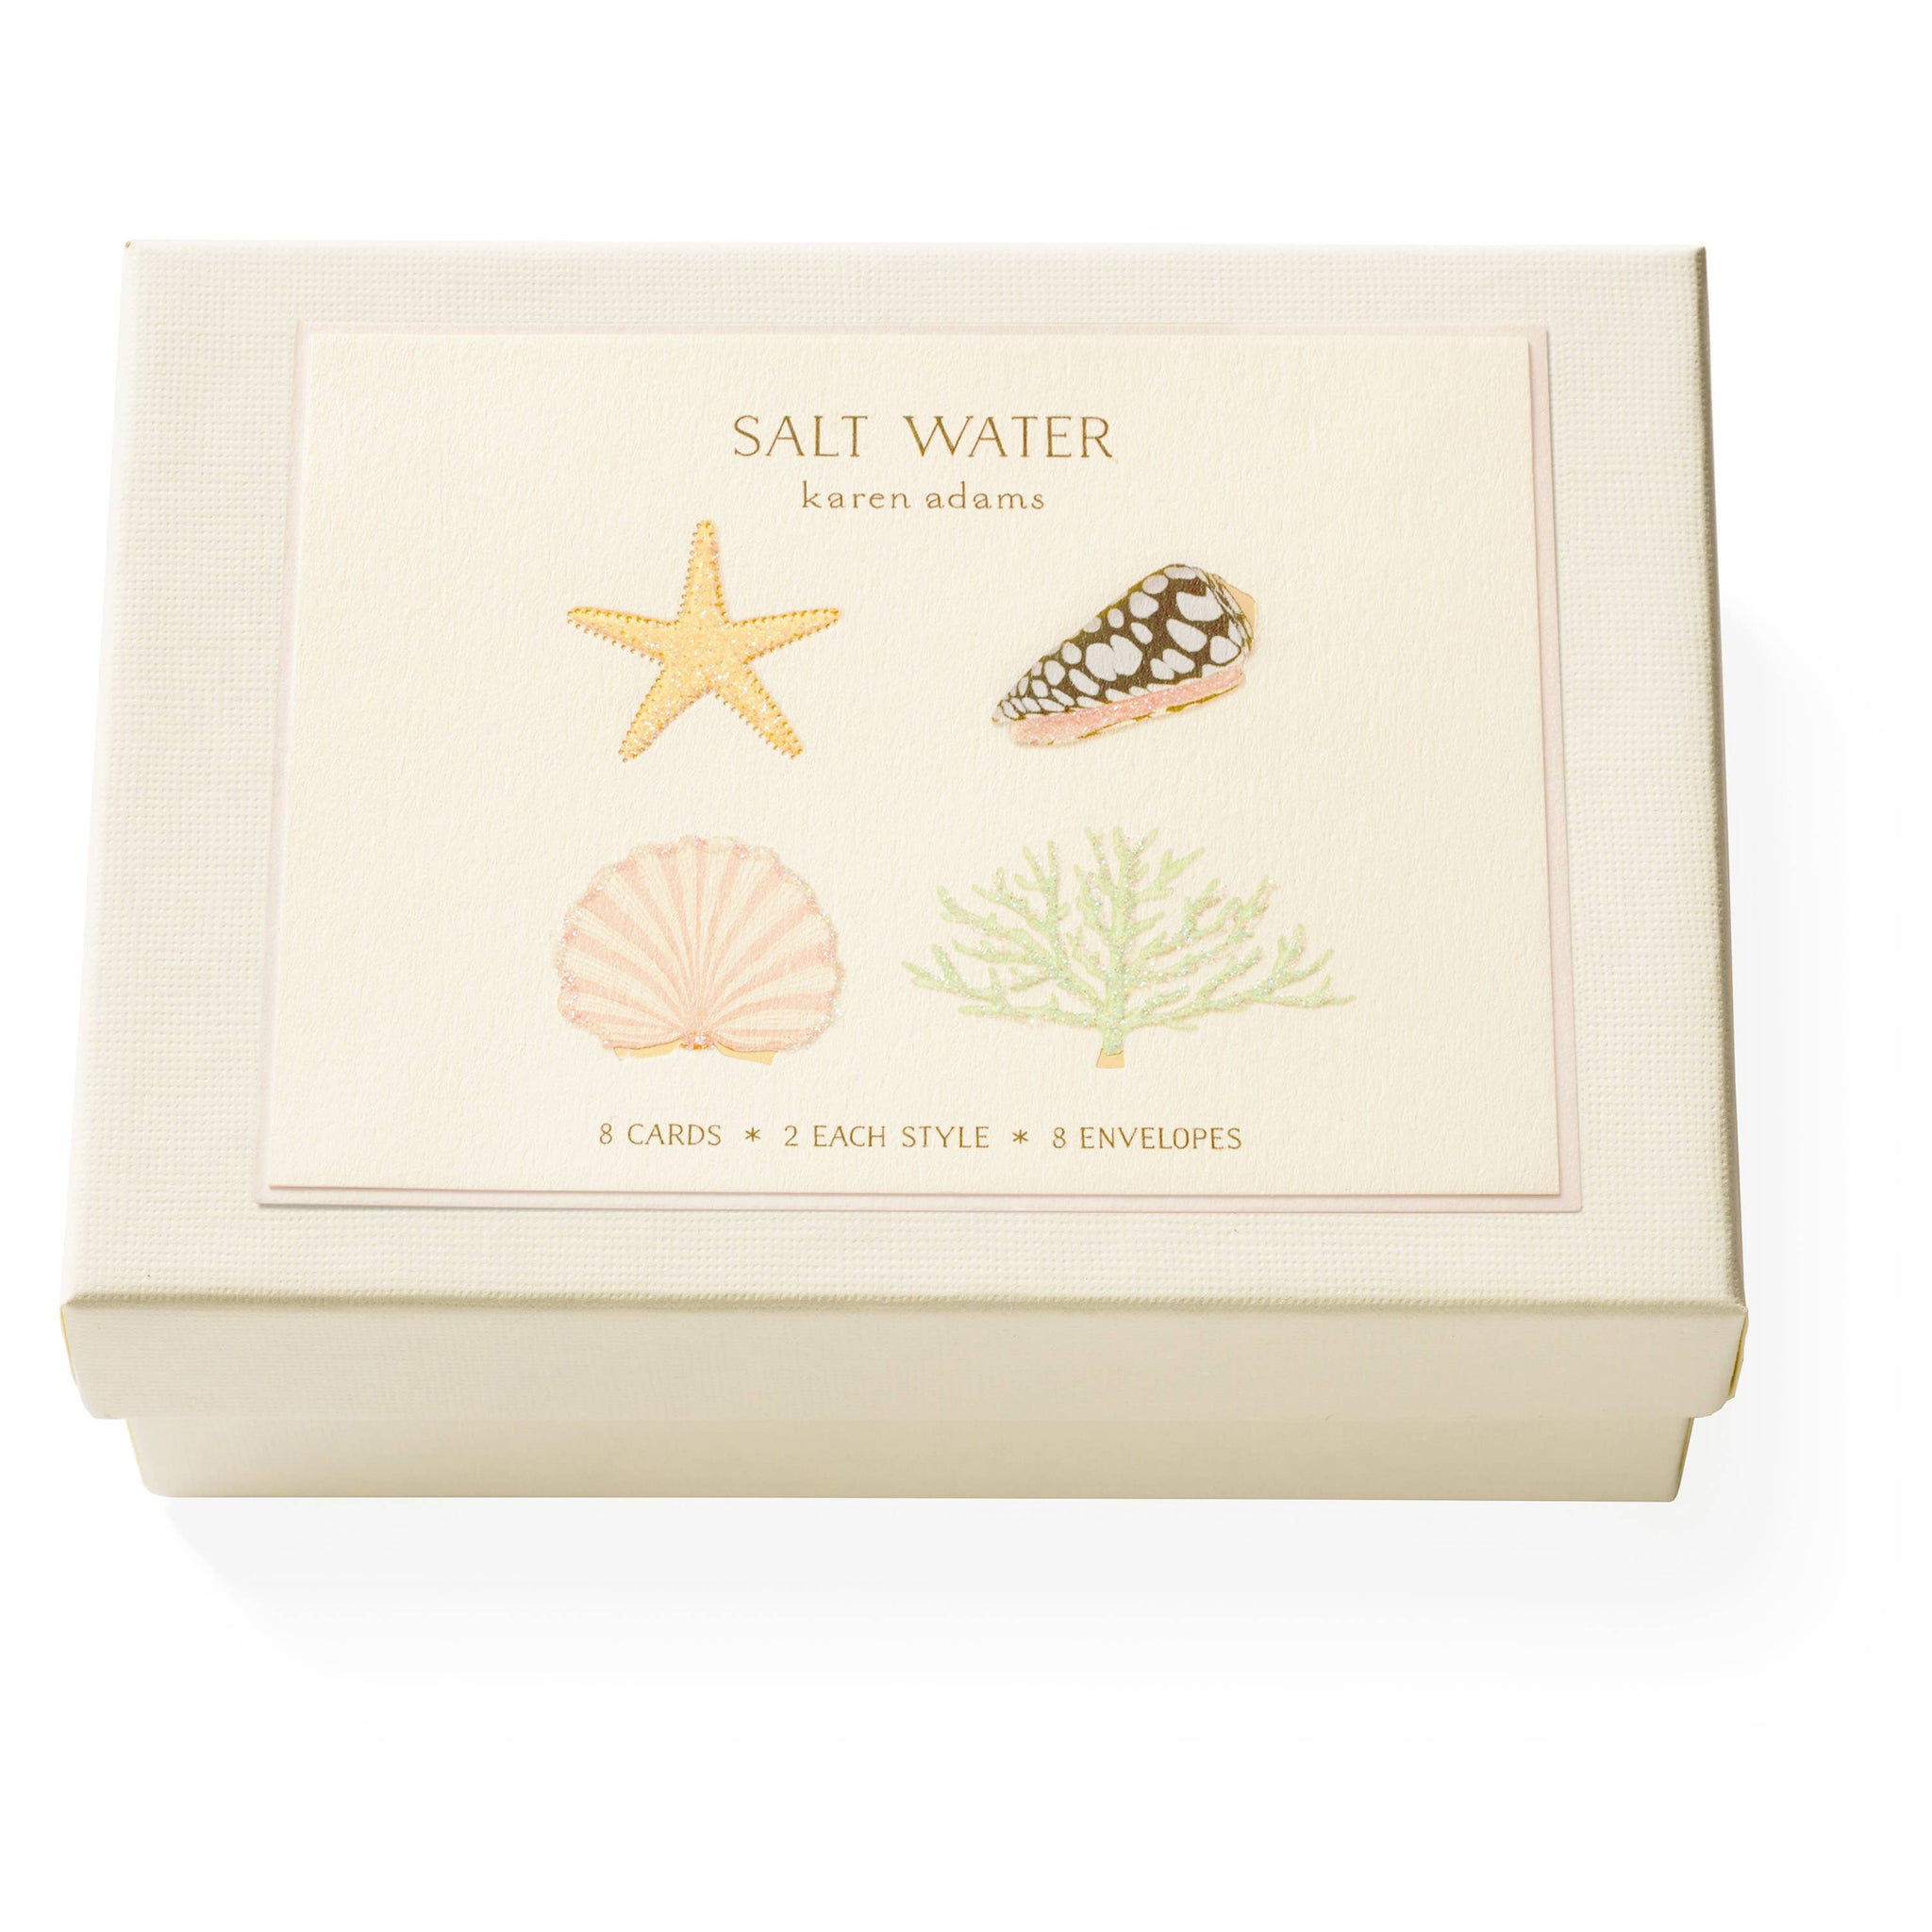 Salt Water Notecard Box